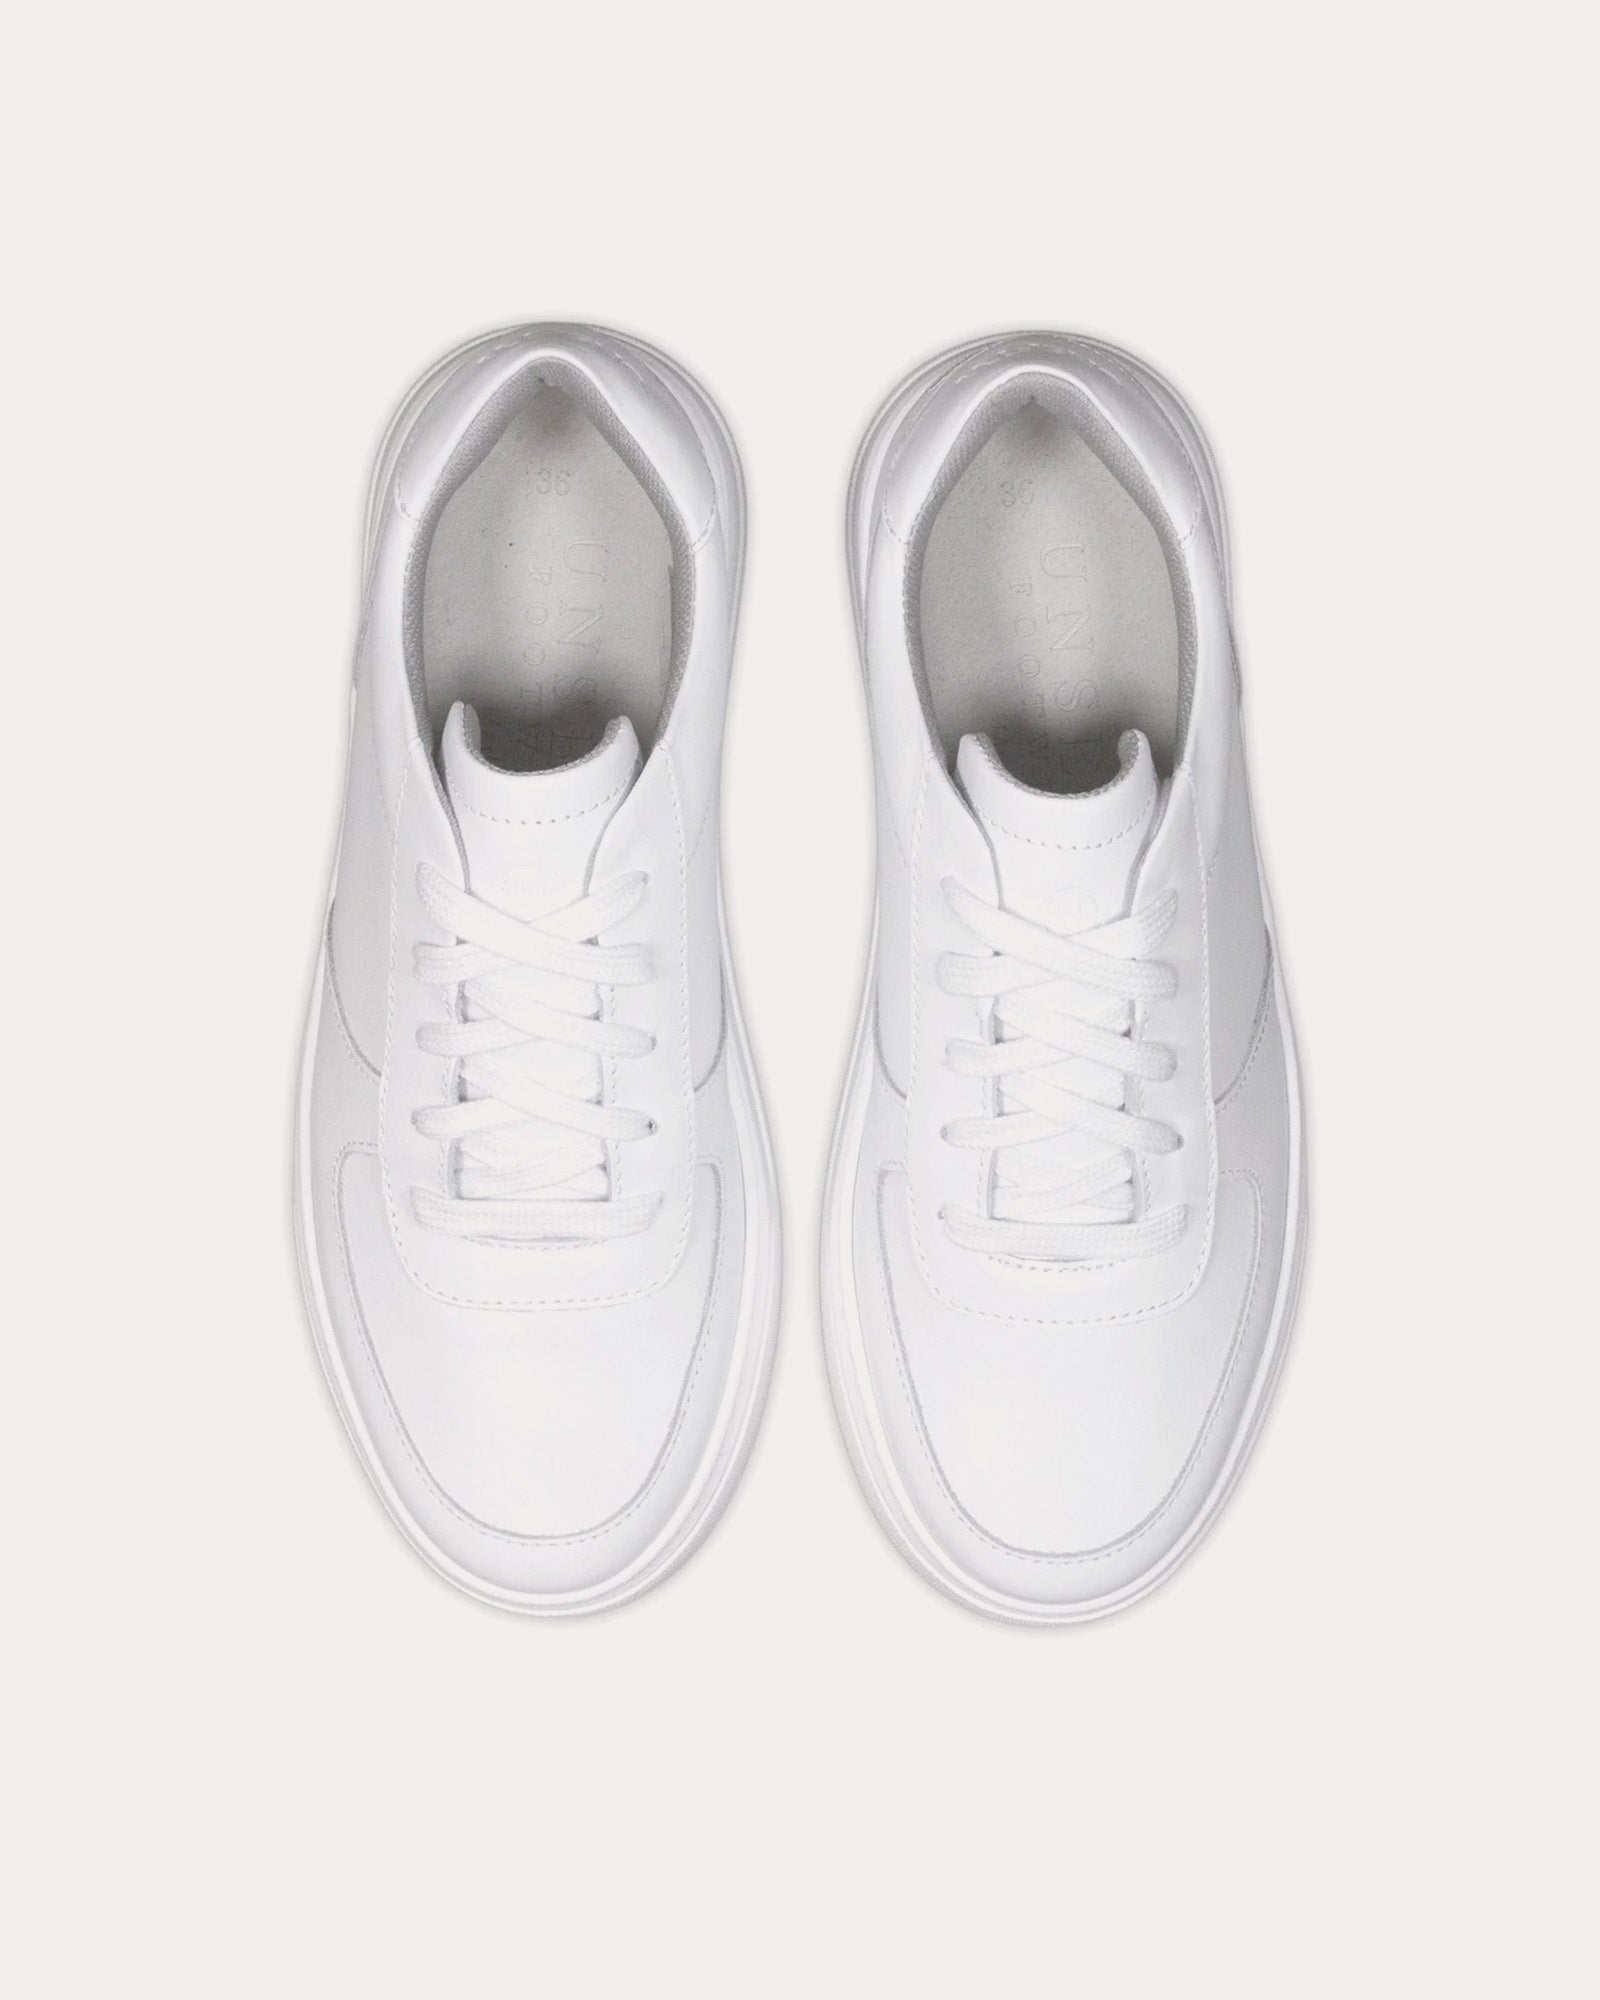 Unseen Footwear - Marais Leather White Low Top Sneakers